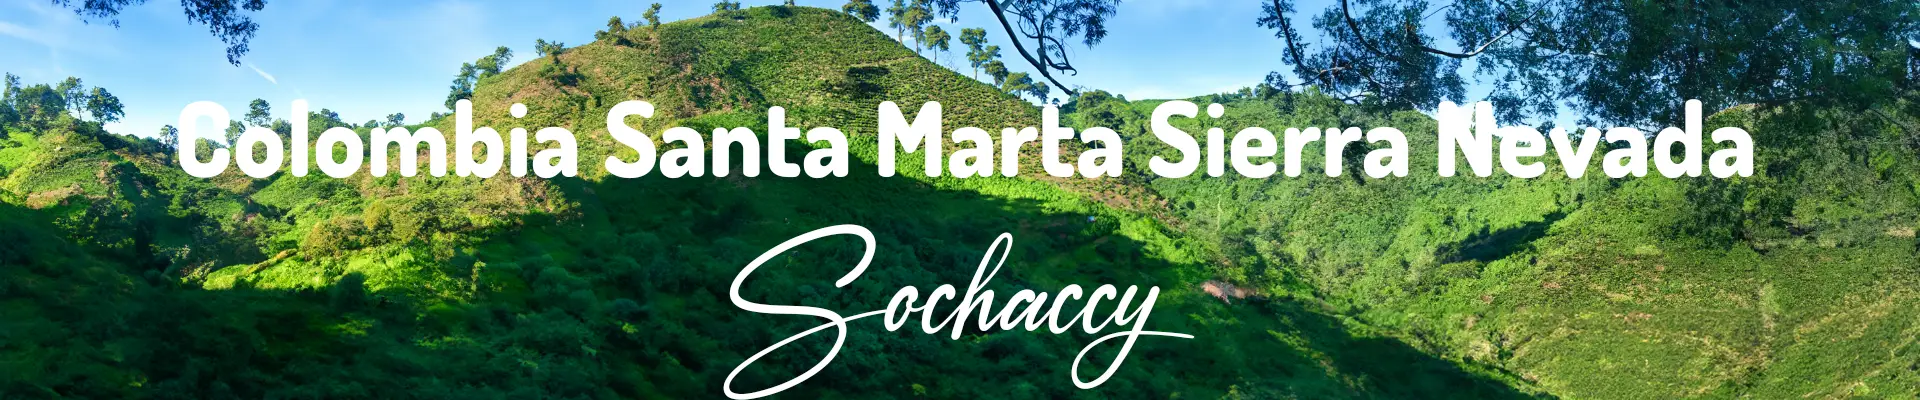 Colombia Santa Marta